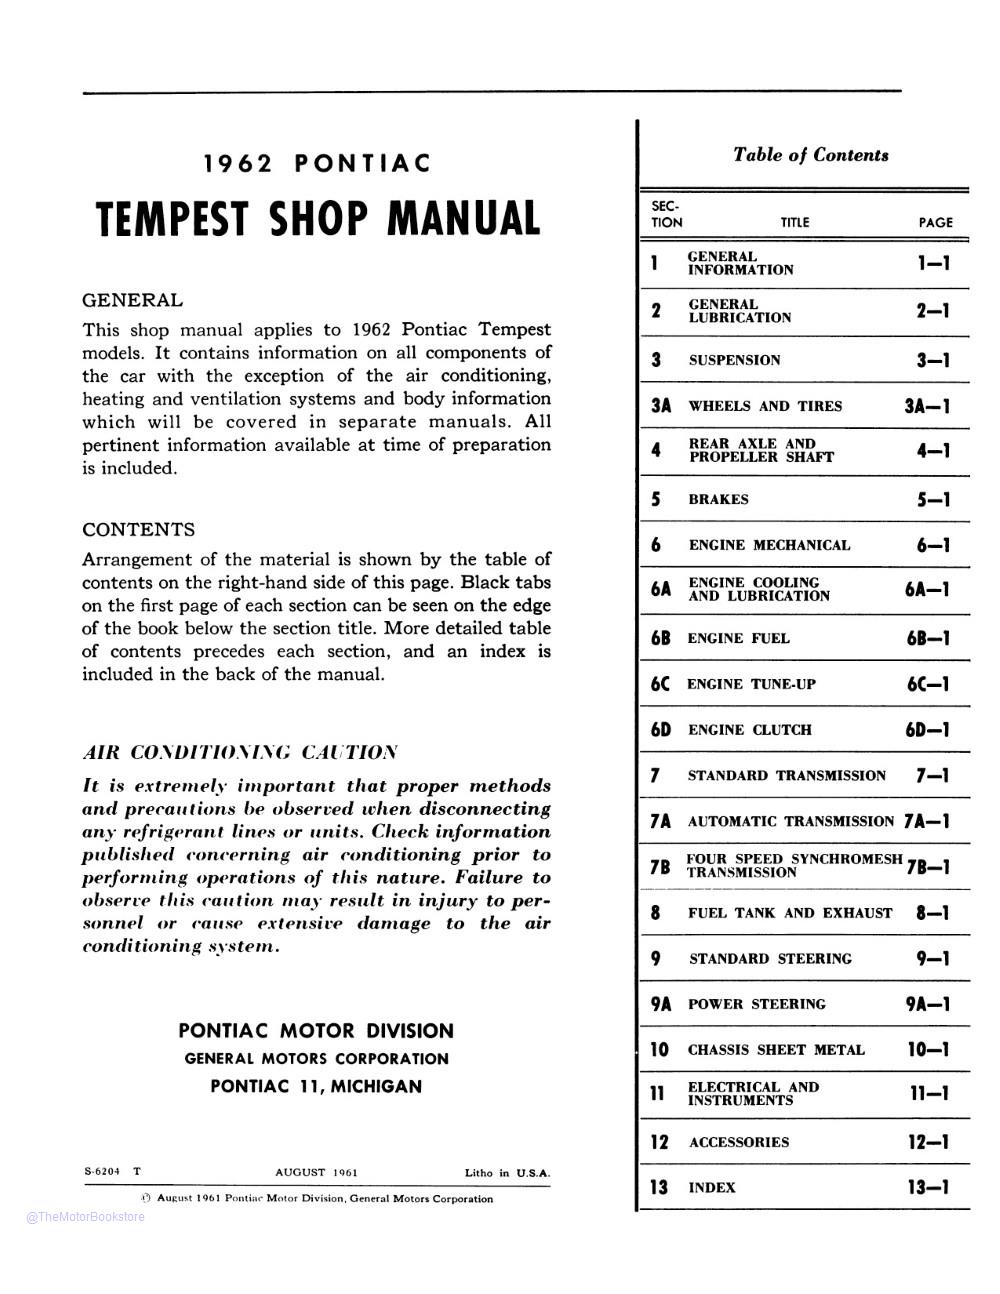 1962 Pontiac Tempest Shop Manual  - Table of Contents